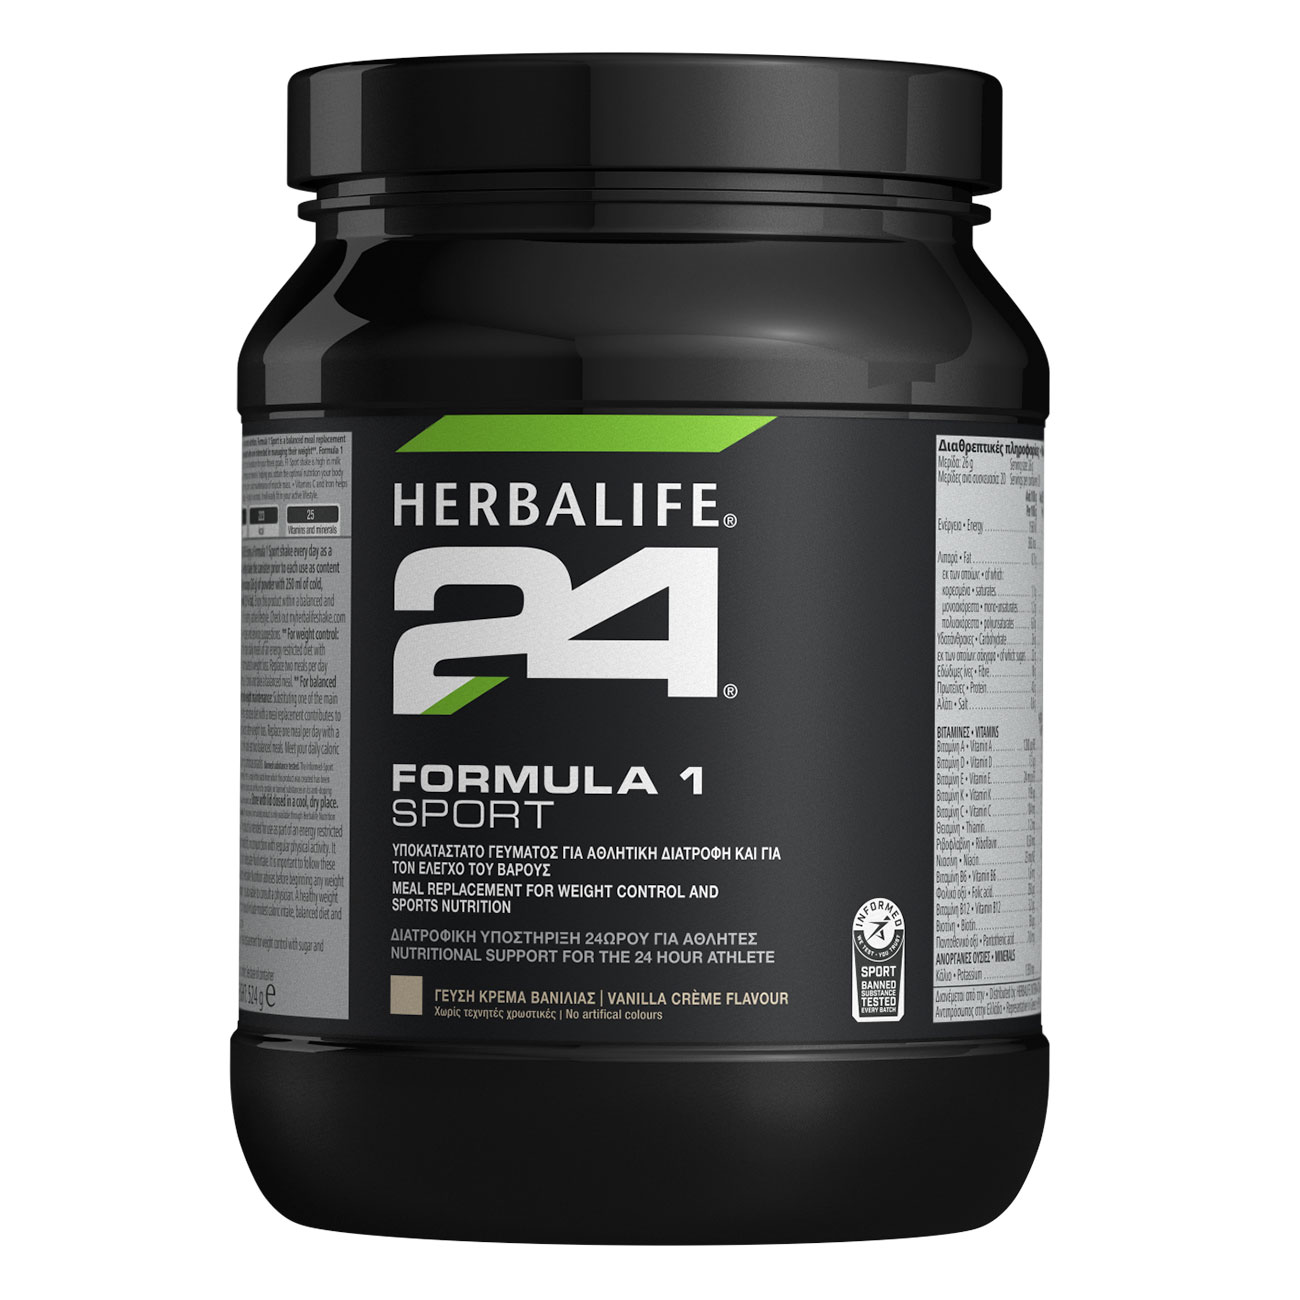 Herbalife24® Formula 1 Sport Πρωτεϊνούχο Ρόφημα  Vanilla Cream product shot.